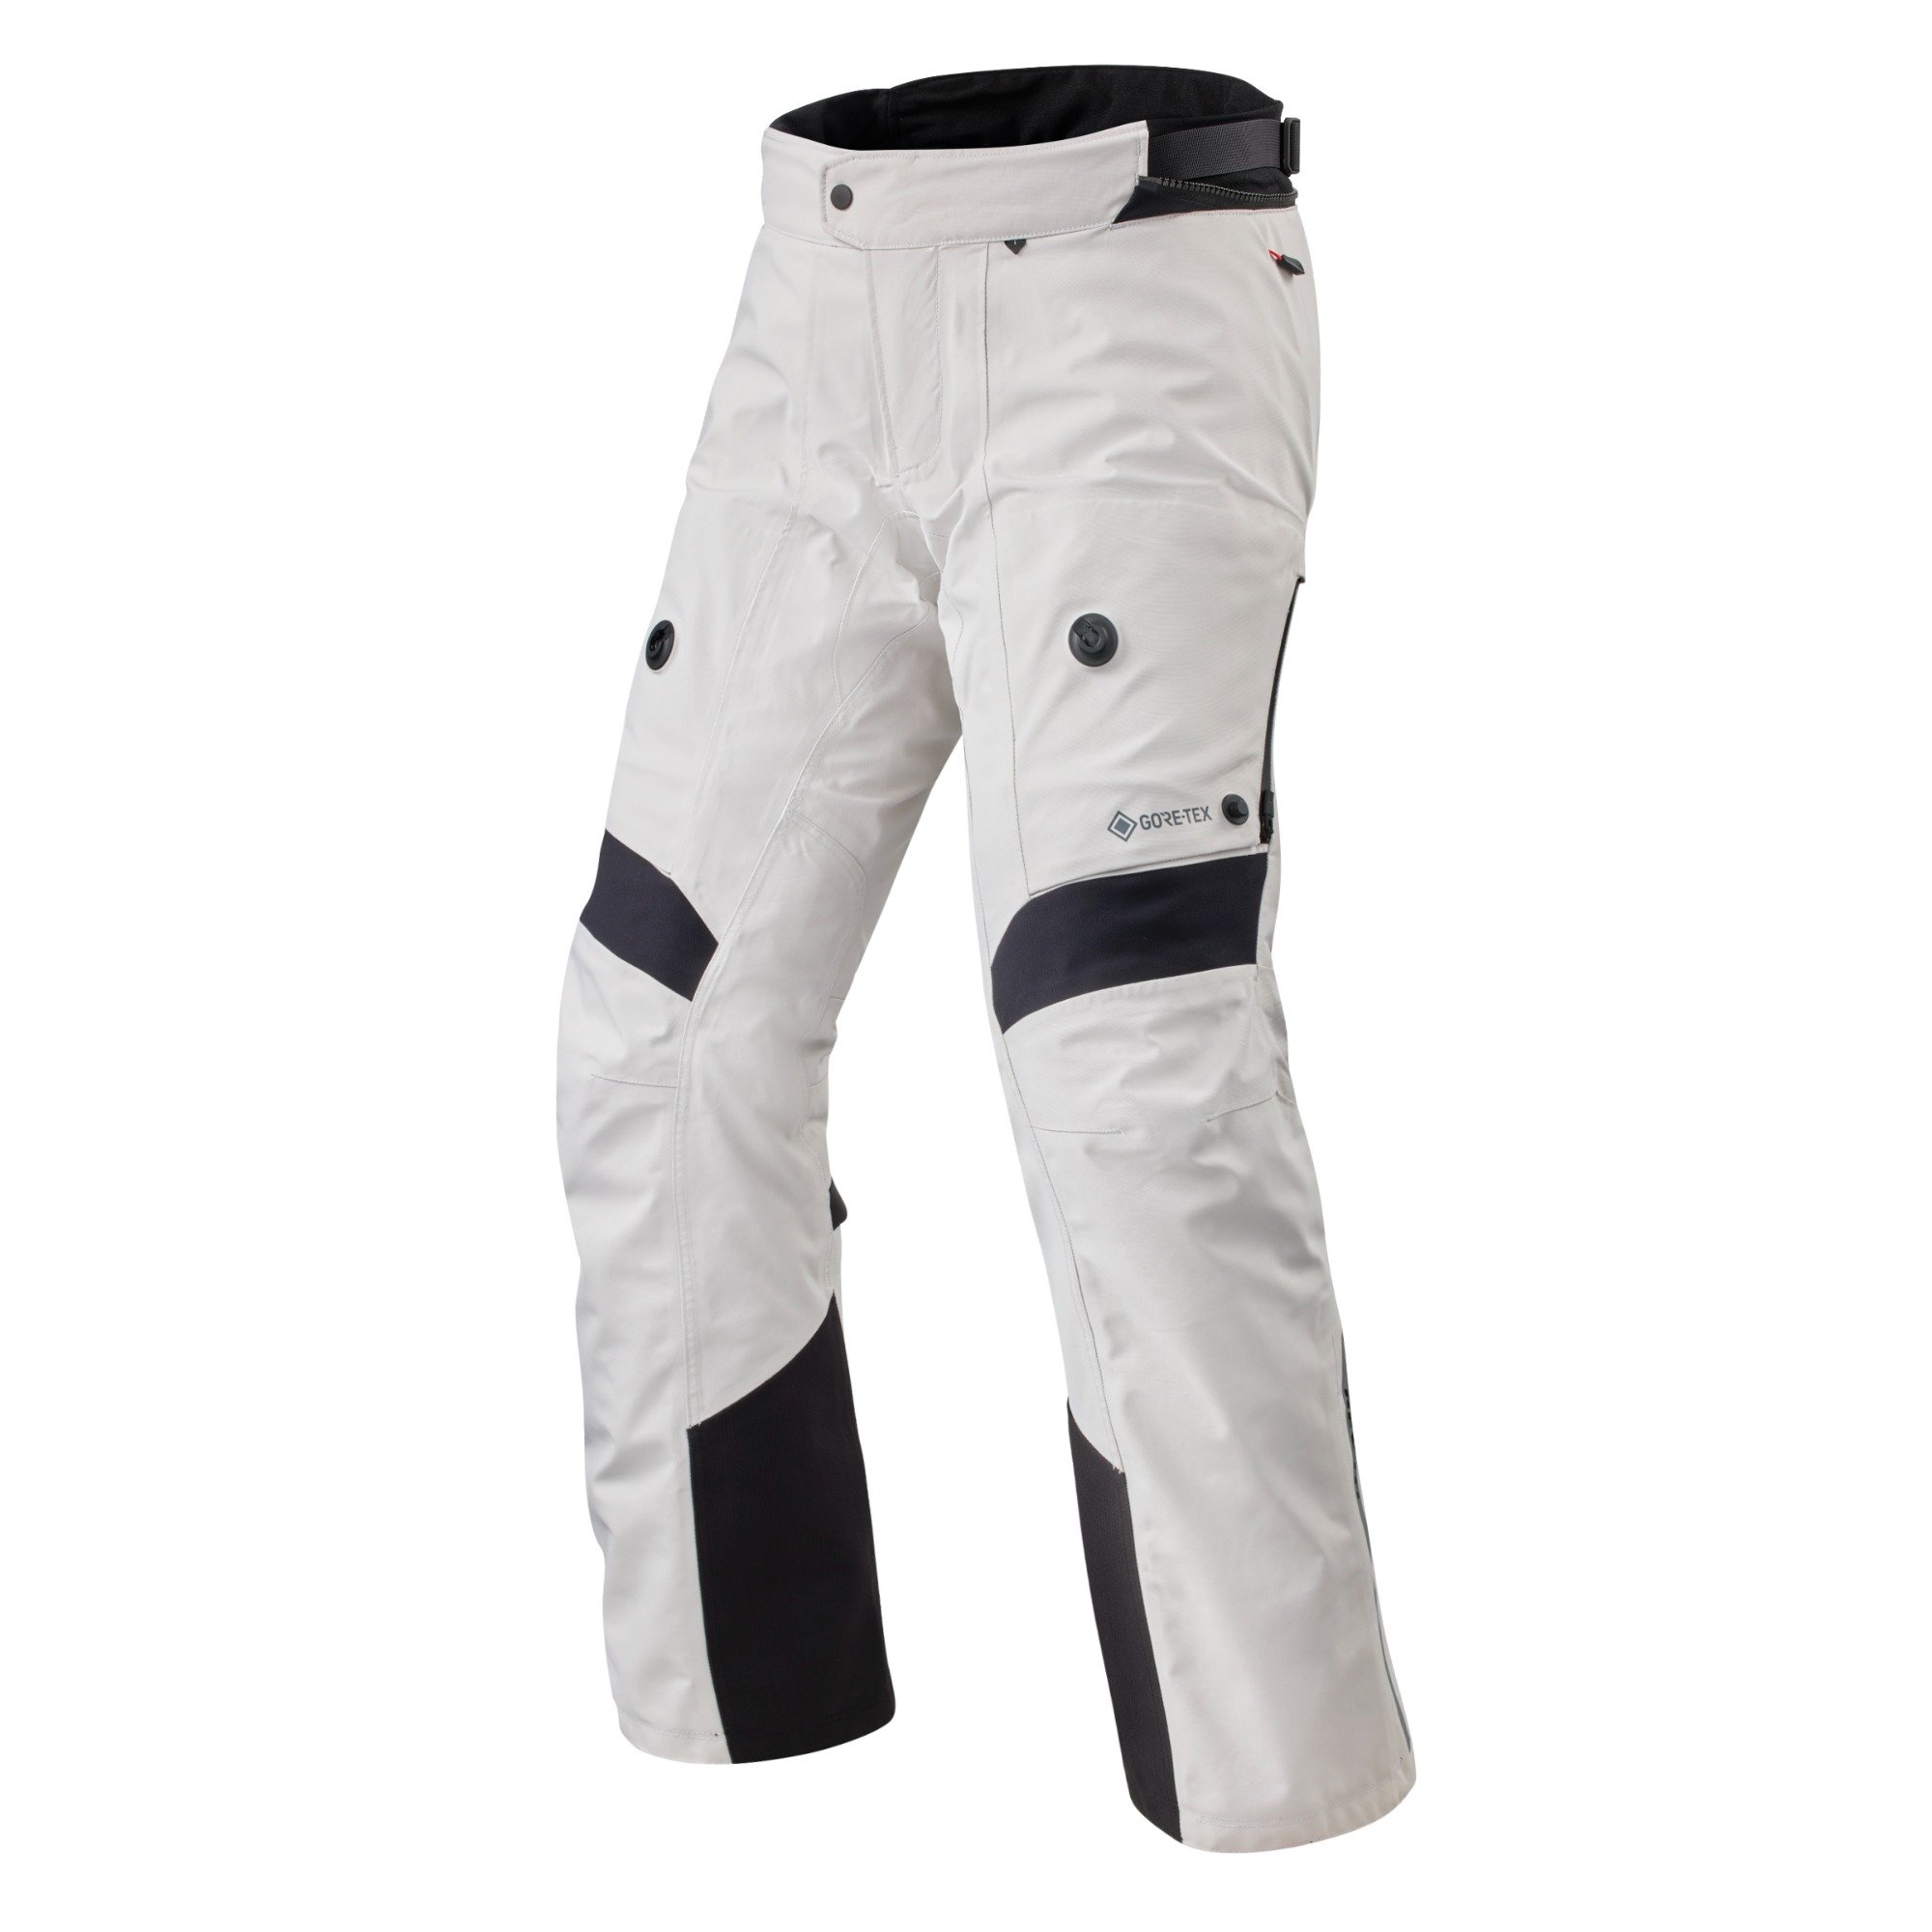 Image of REV'IT! Pants Poseidon 3 GTX Silver Black Short Motorcycle Pants Talla 2XL